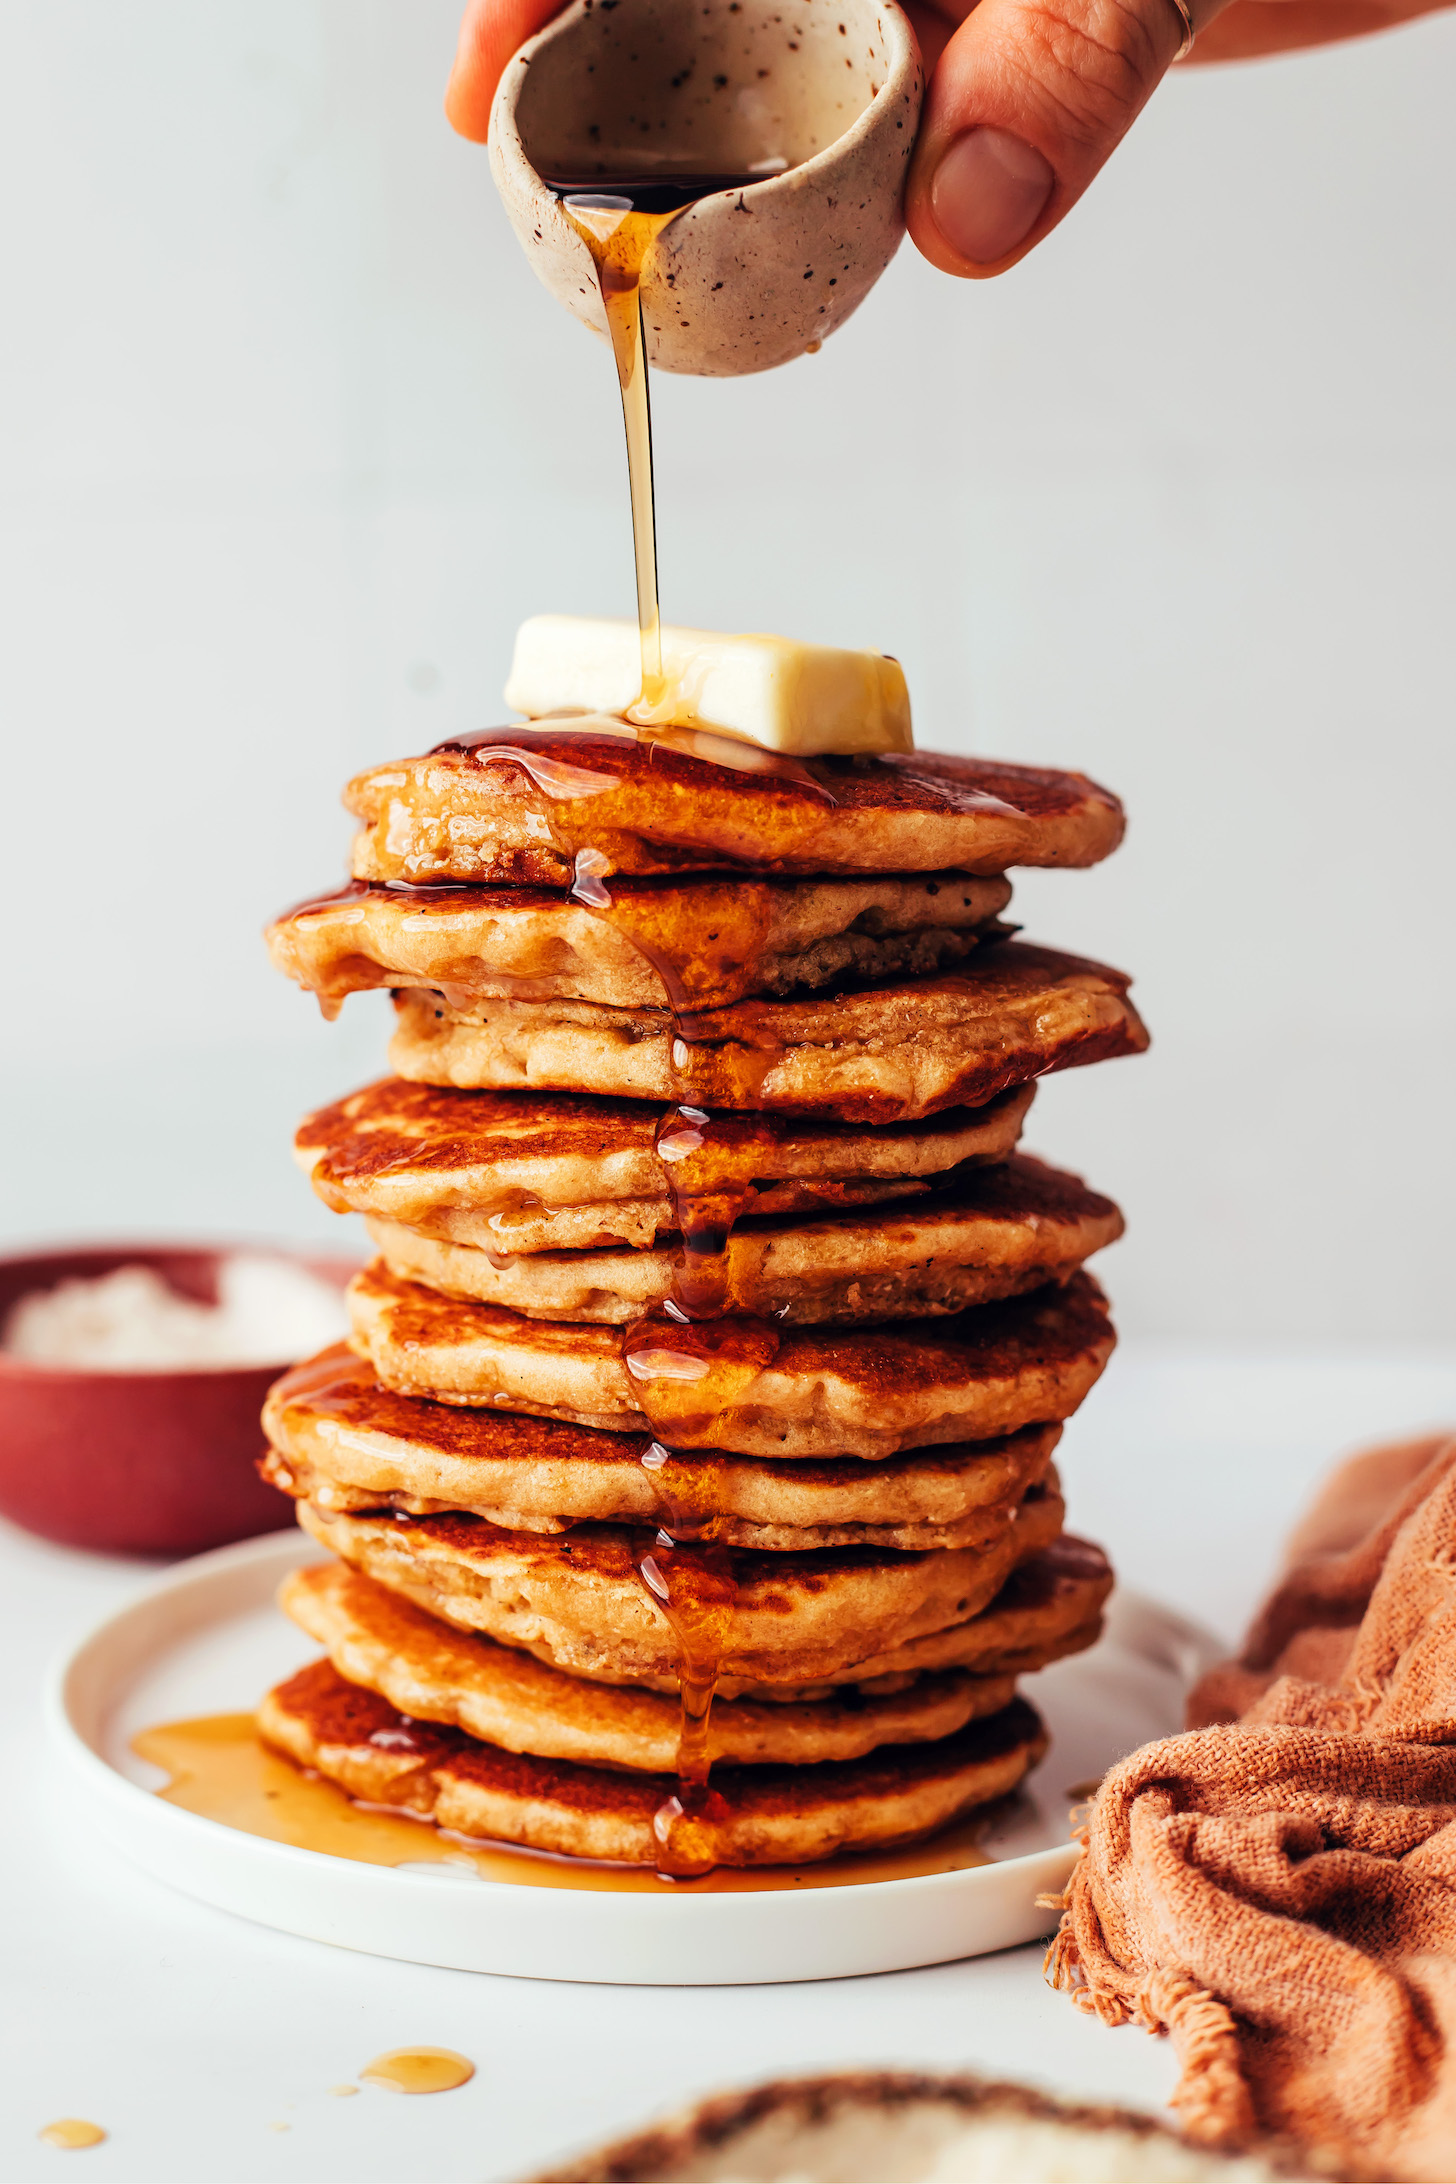 The Best Gluten-Free Pancakes - Gluten-Free Baking